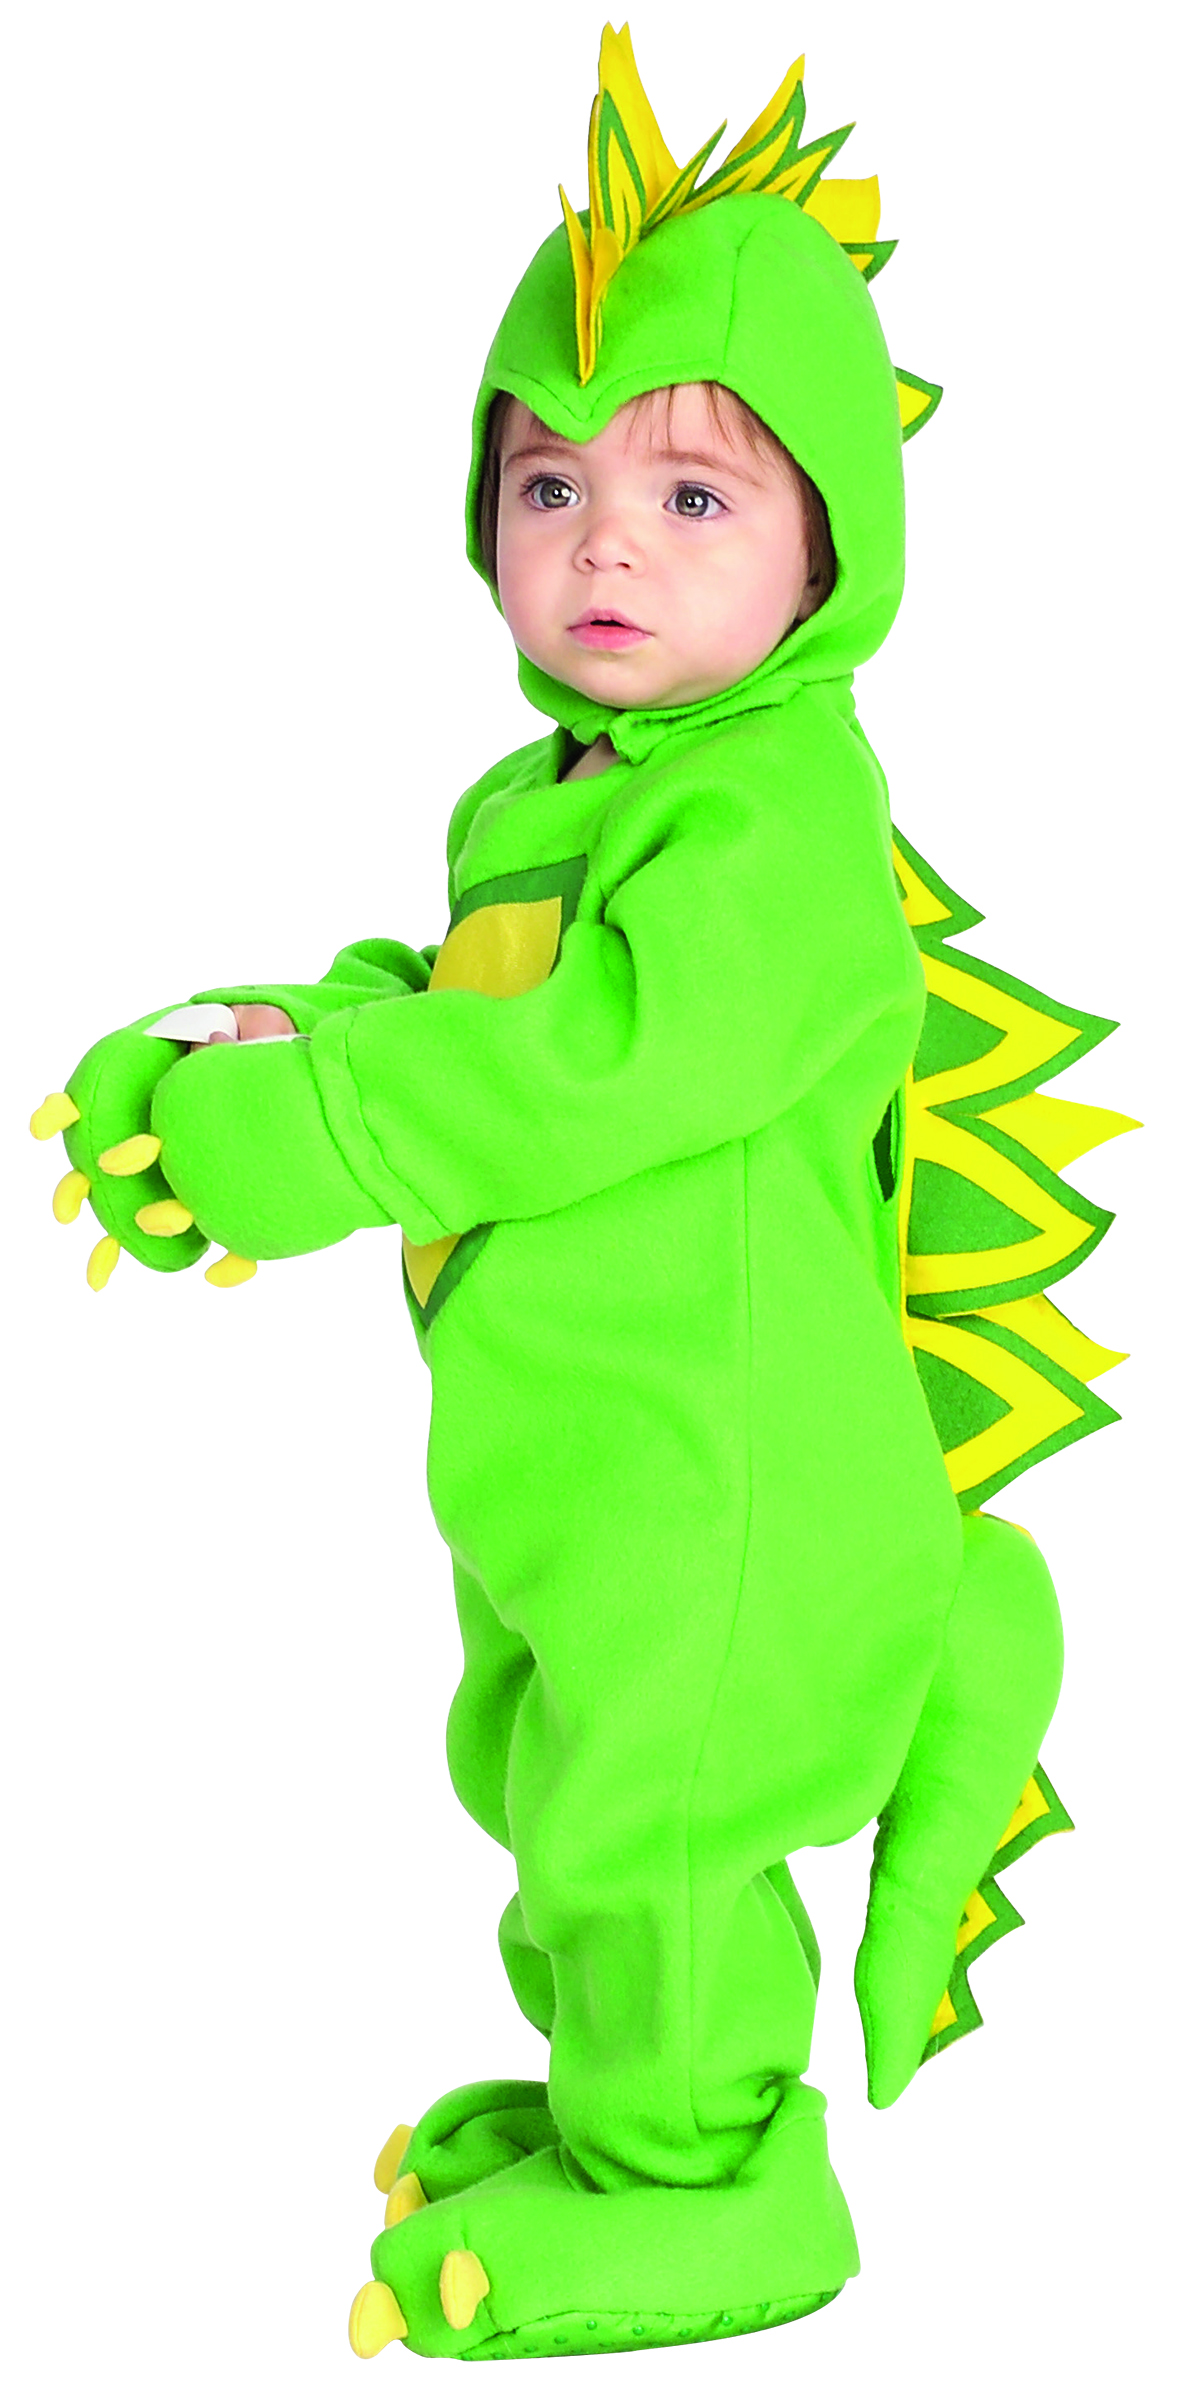 PxP 2885339 - Dragon, Kleinkind Kostüm Gr. Infant, Baby Drache